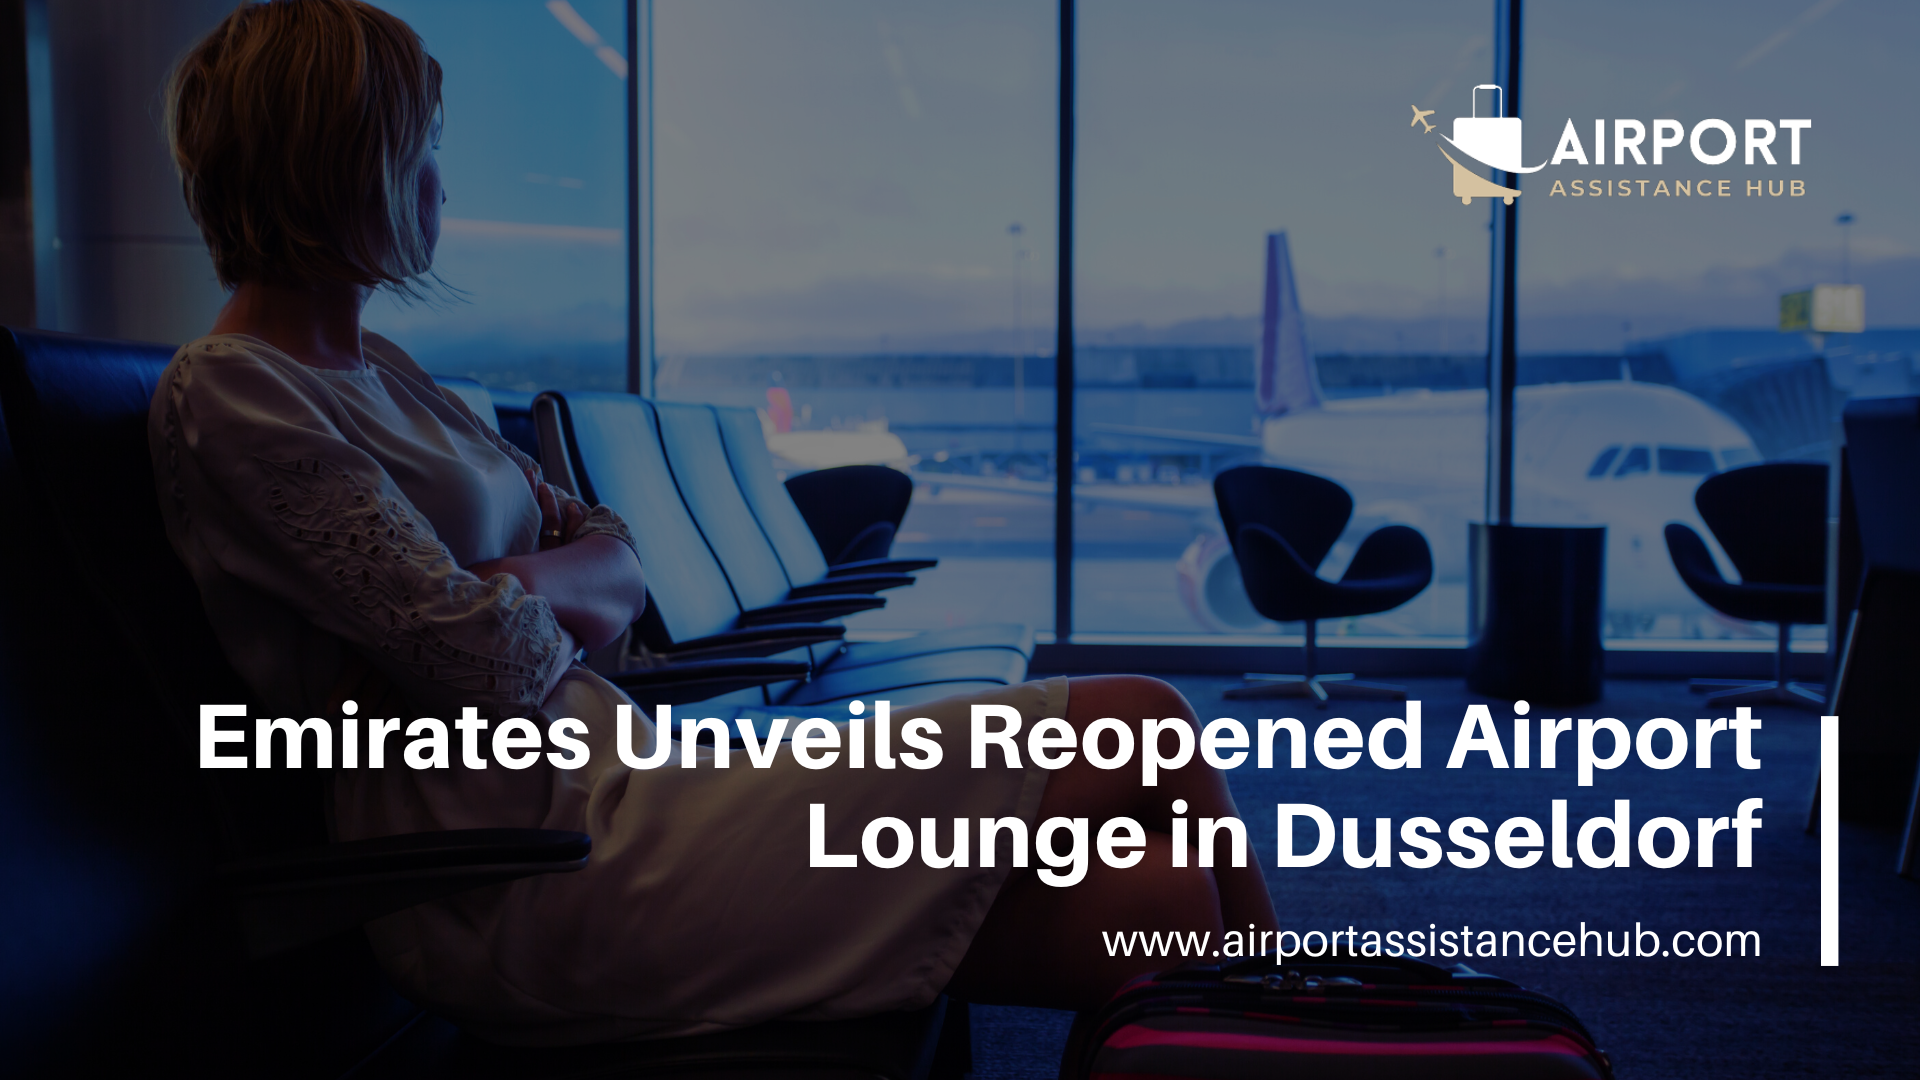 Emirates Unveils Reopened Airport Lounge in Dusseldorf